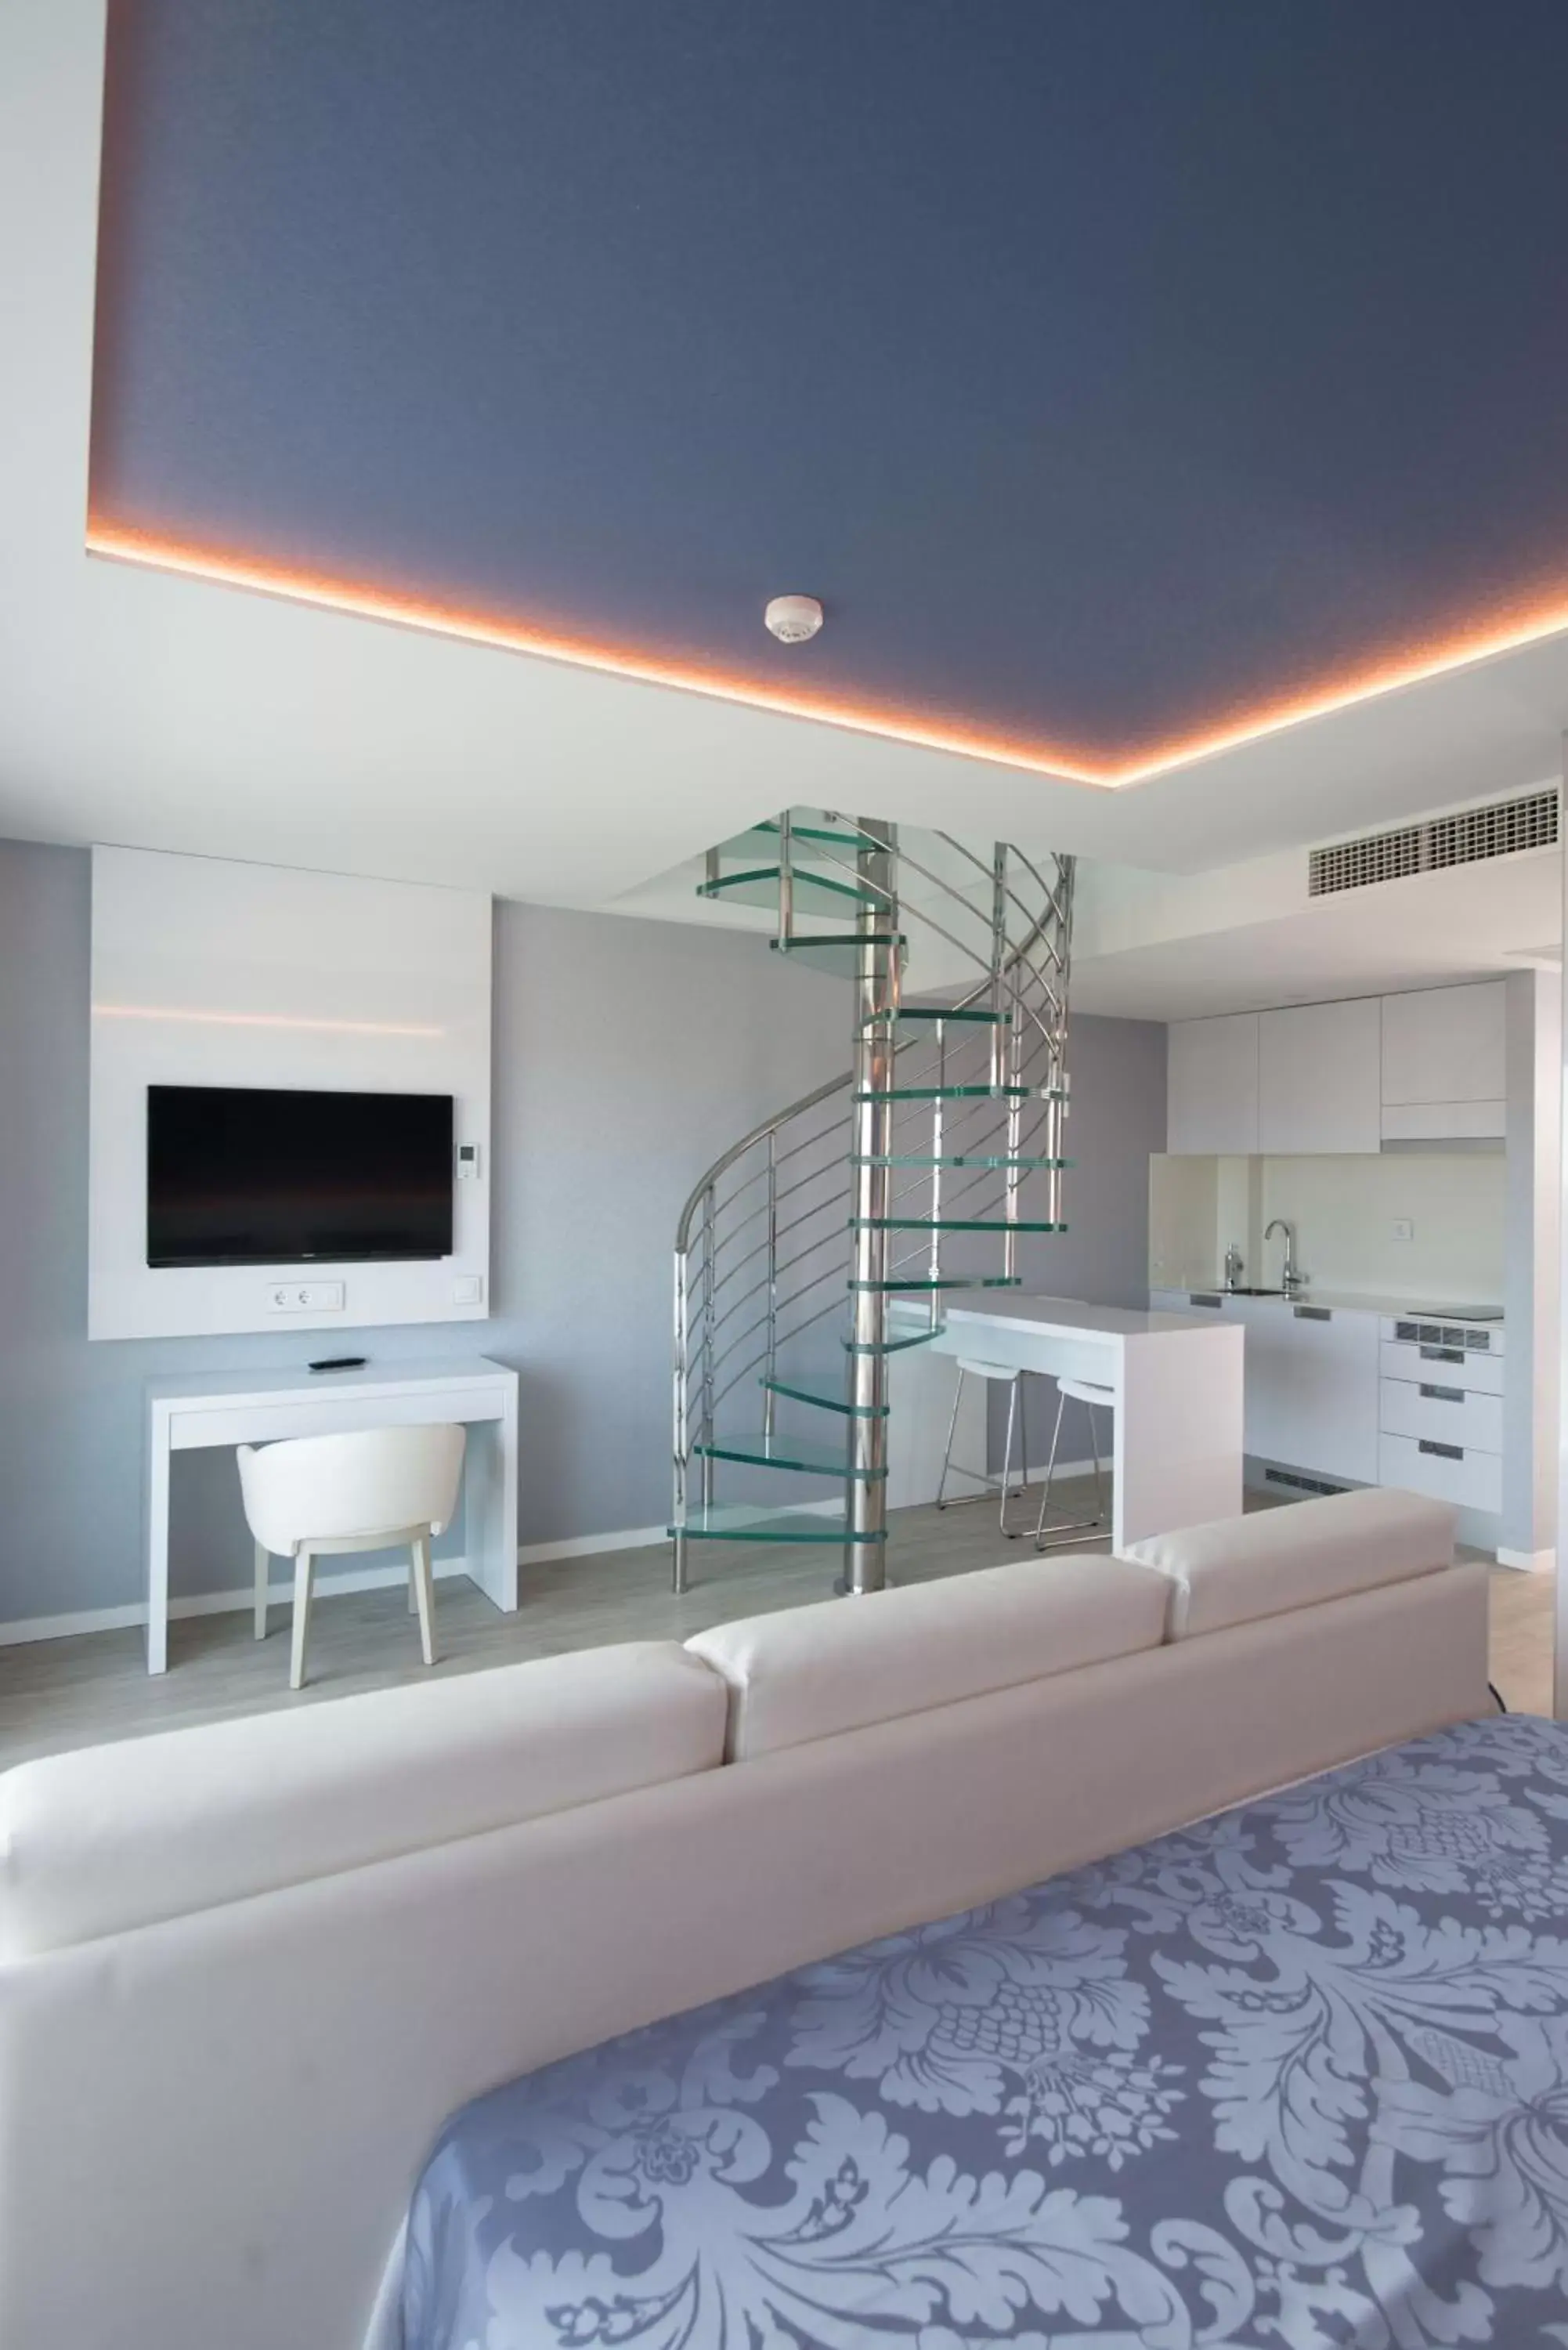 Photo of the whole room in Masd Mediterraneo Hotel Apartamentos Spa